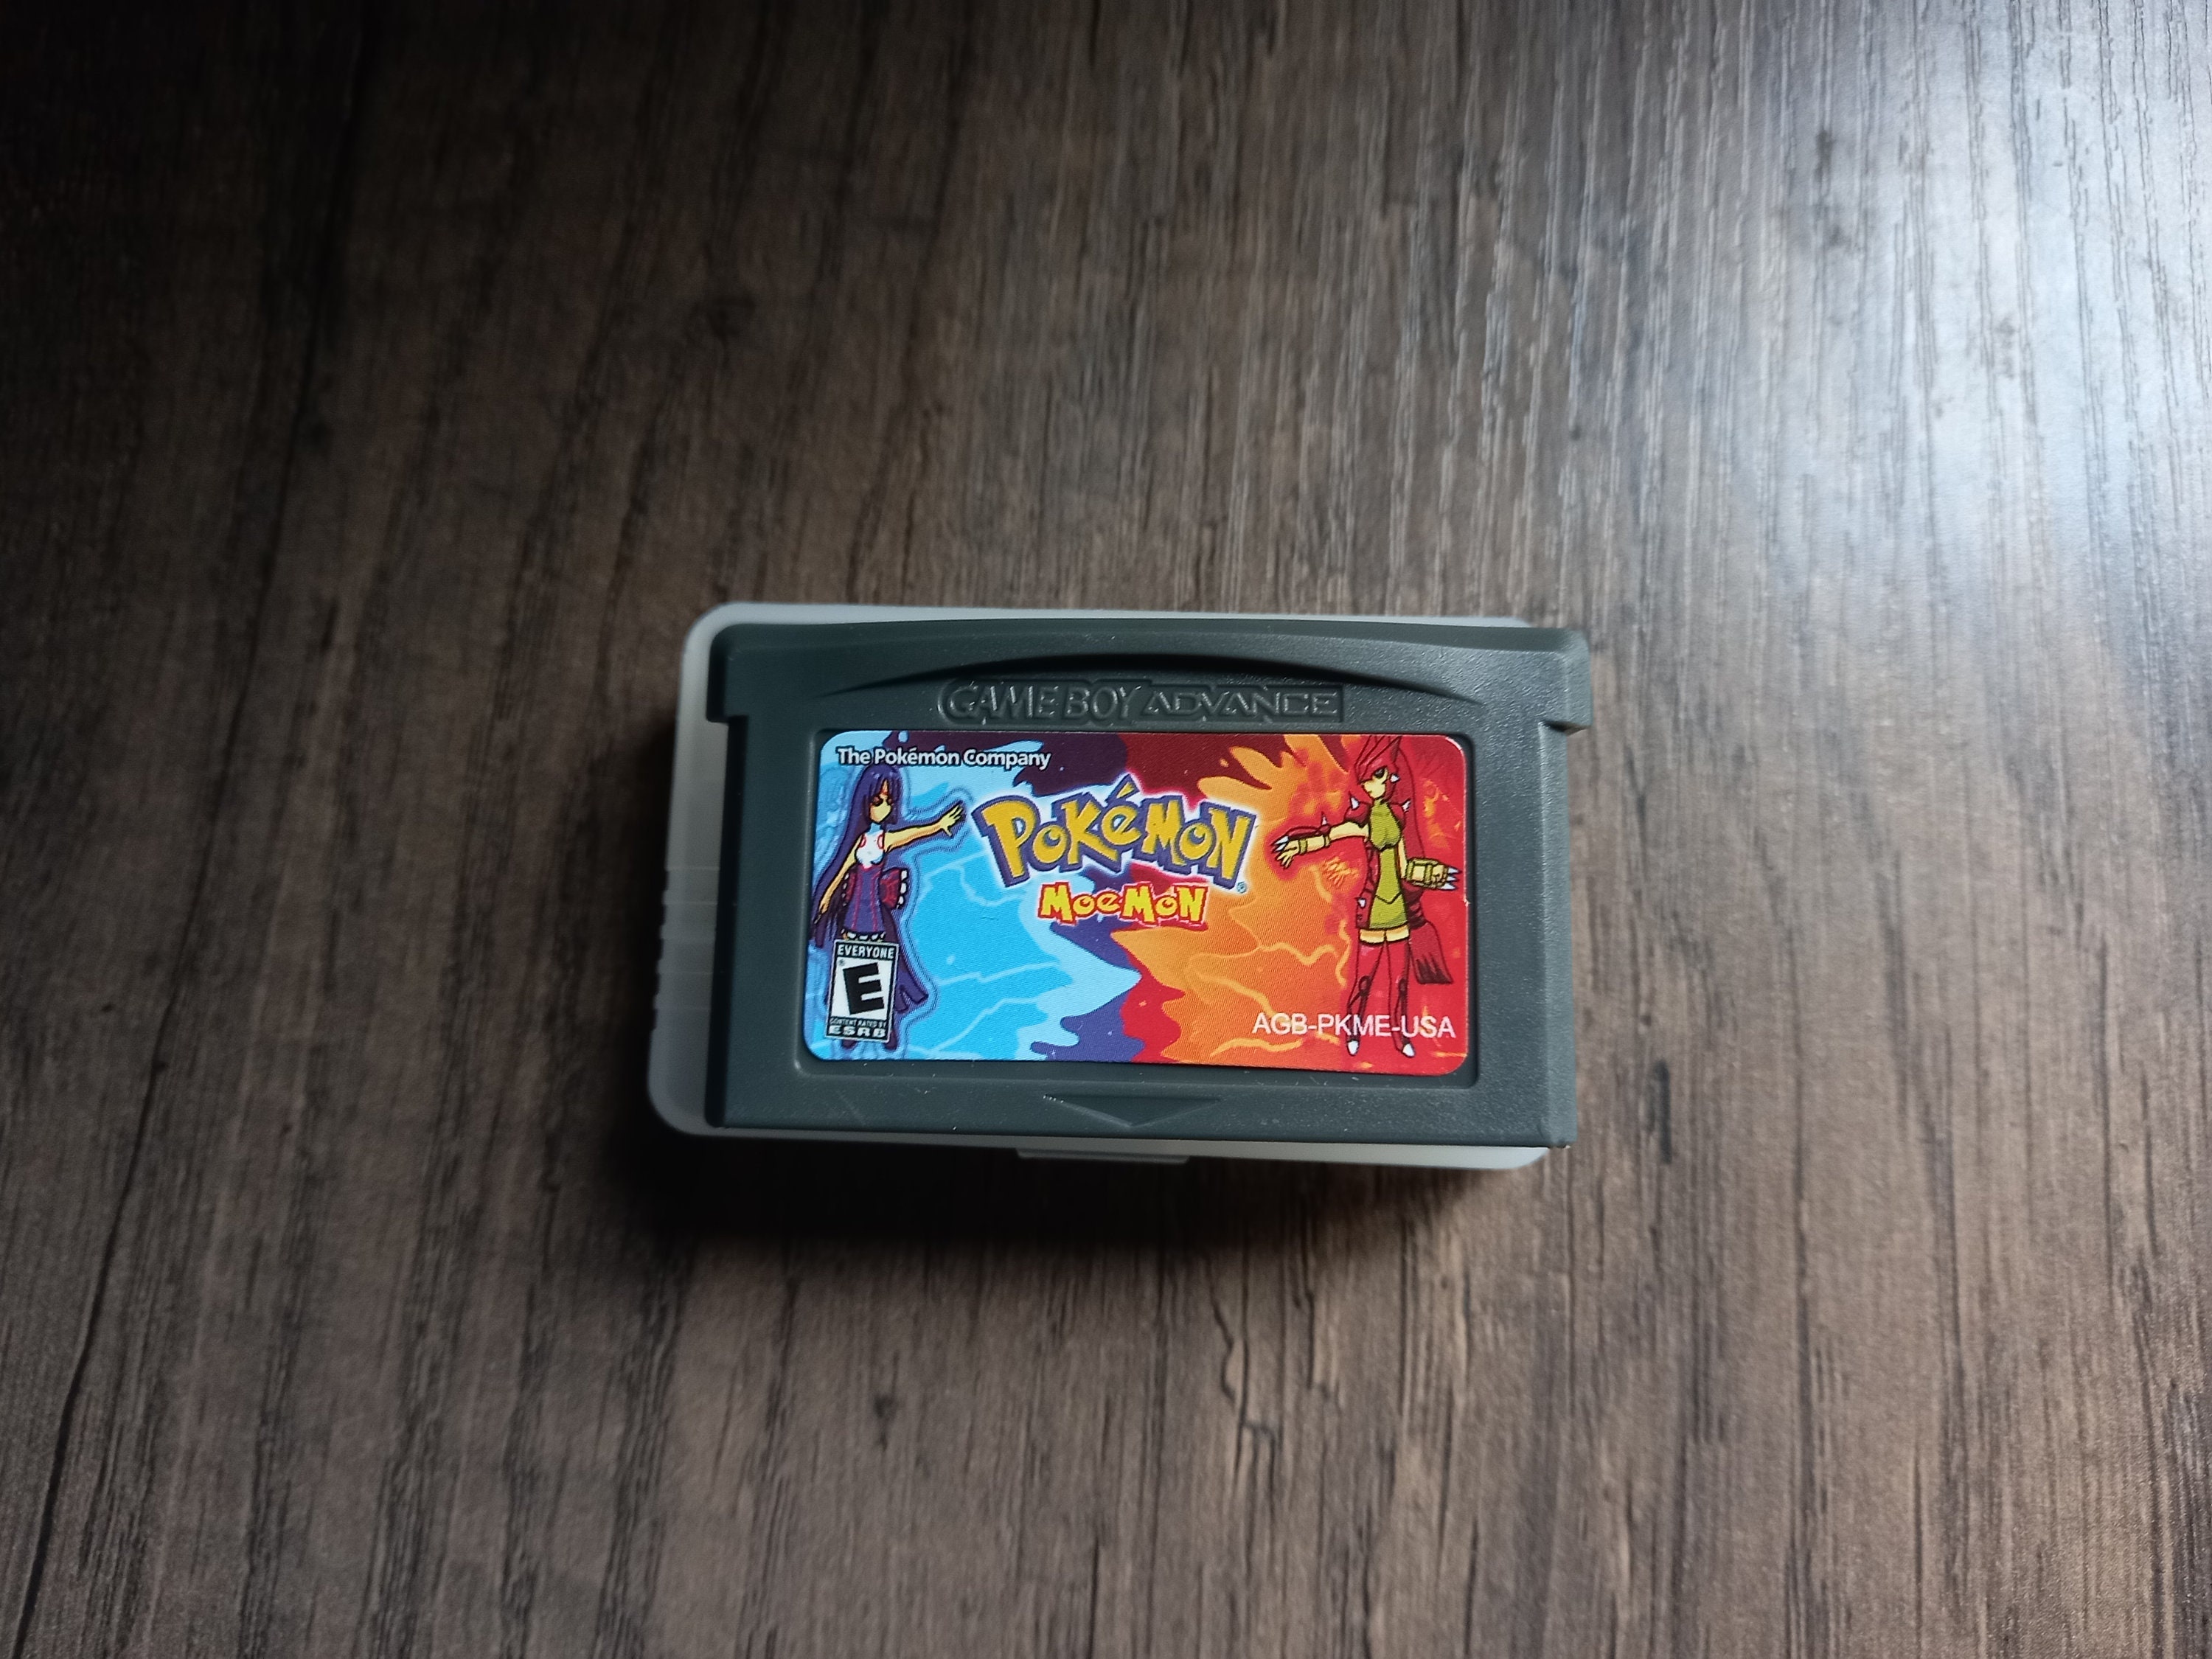 Mega Moemon FireRed - Nintendo Game Boy Advance ROM - Download